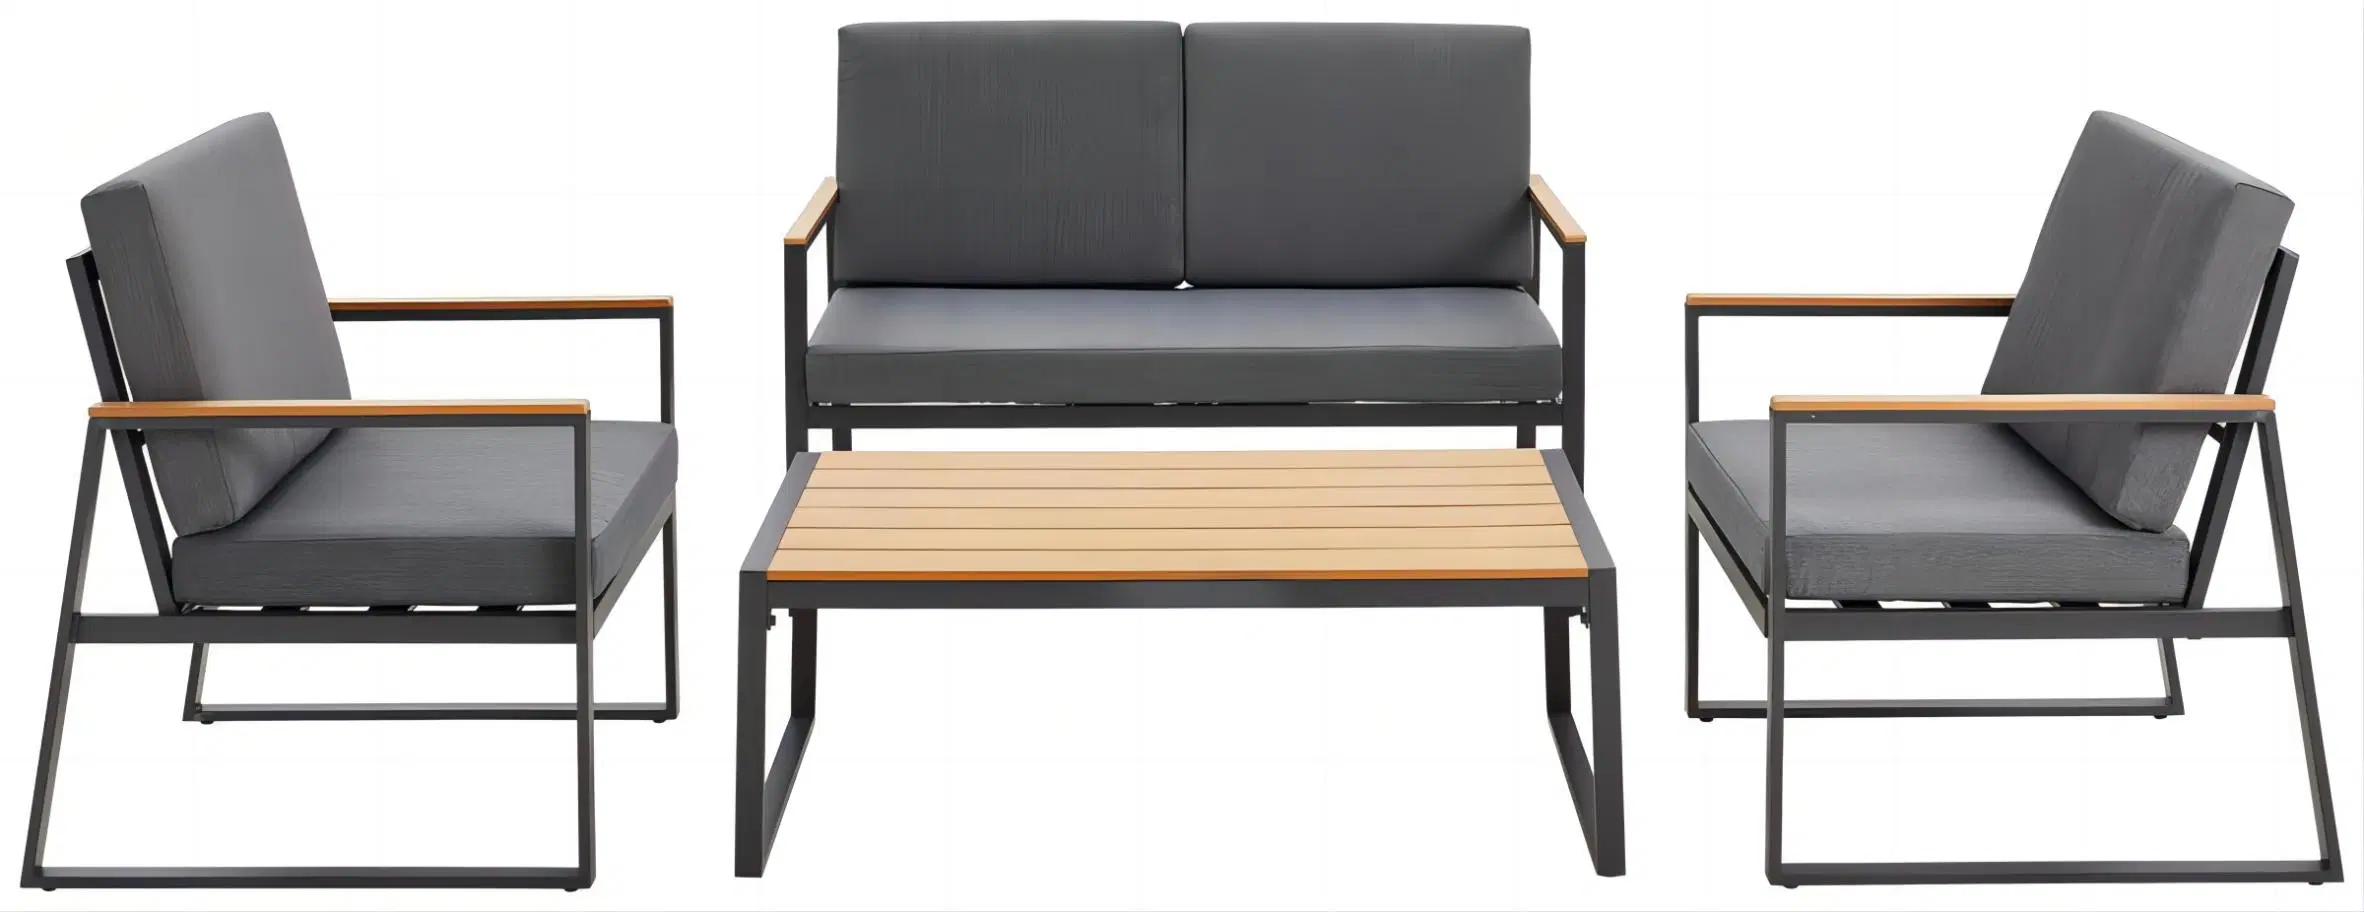 Luxury Outdoor Furniture Aluminum Wood Garden Sofa Set for 4 Seater Patio Restaurant Hotel Waterproof Teak Couch Sofa Set